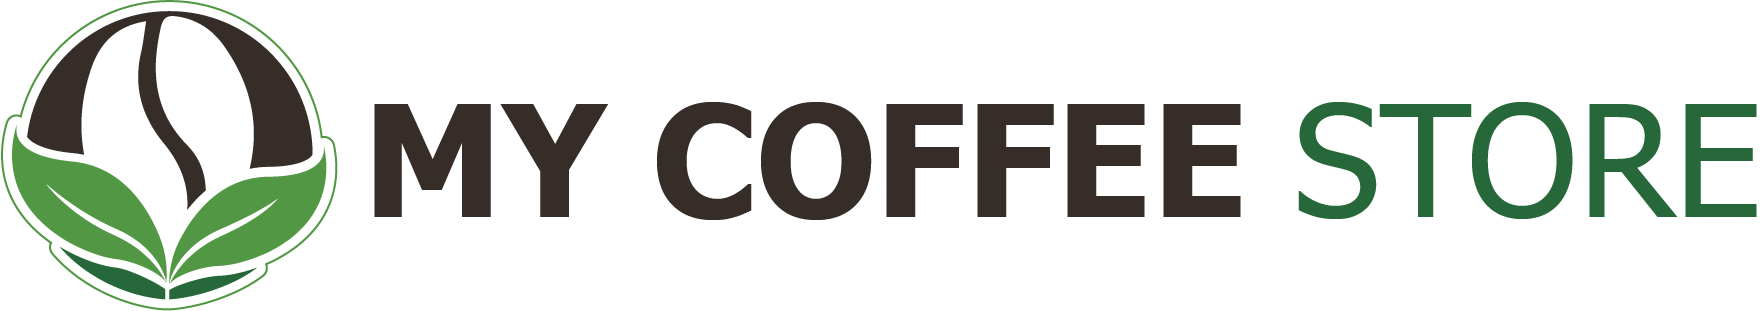 logo my coffee store